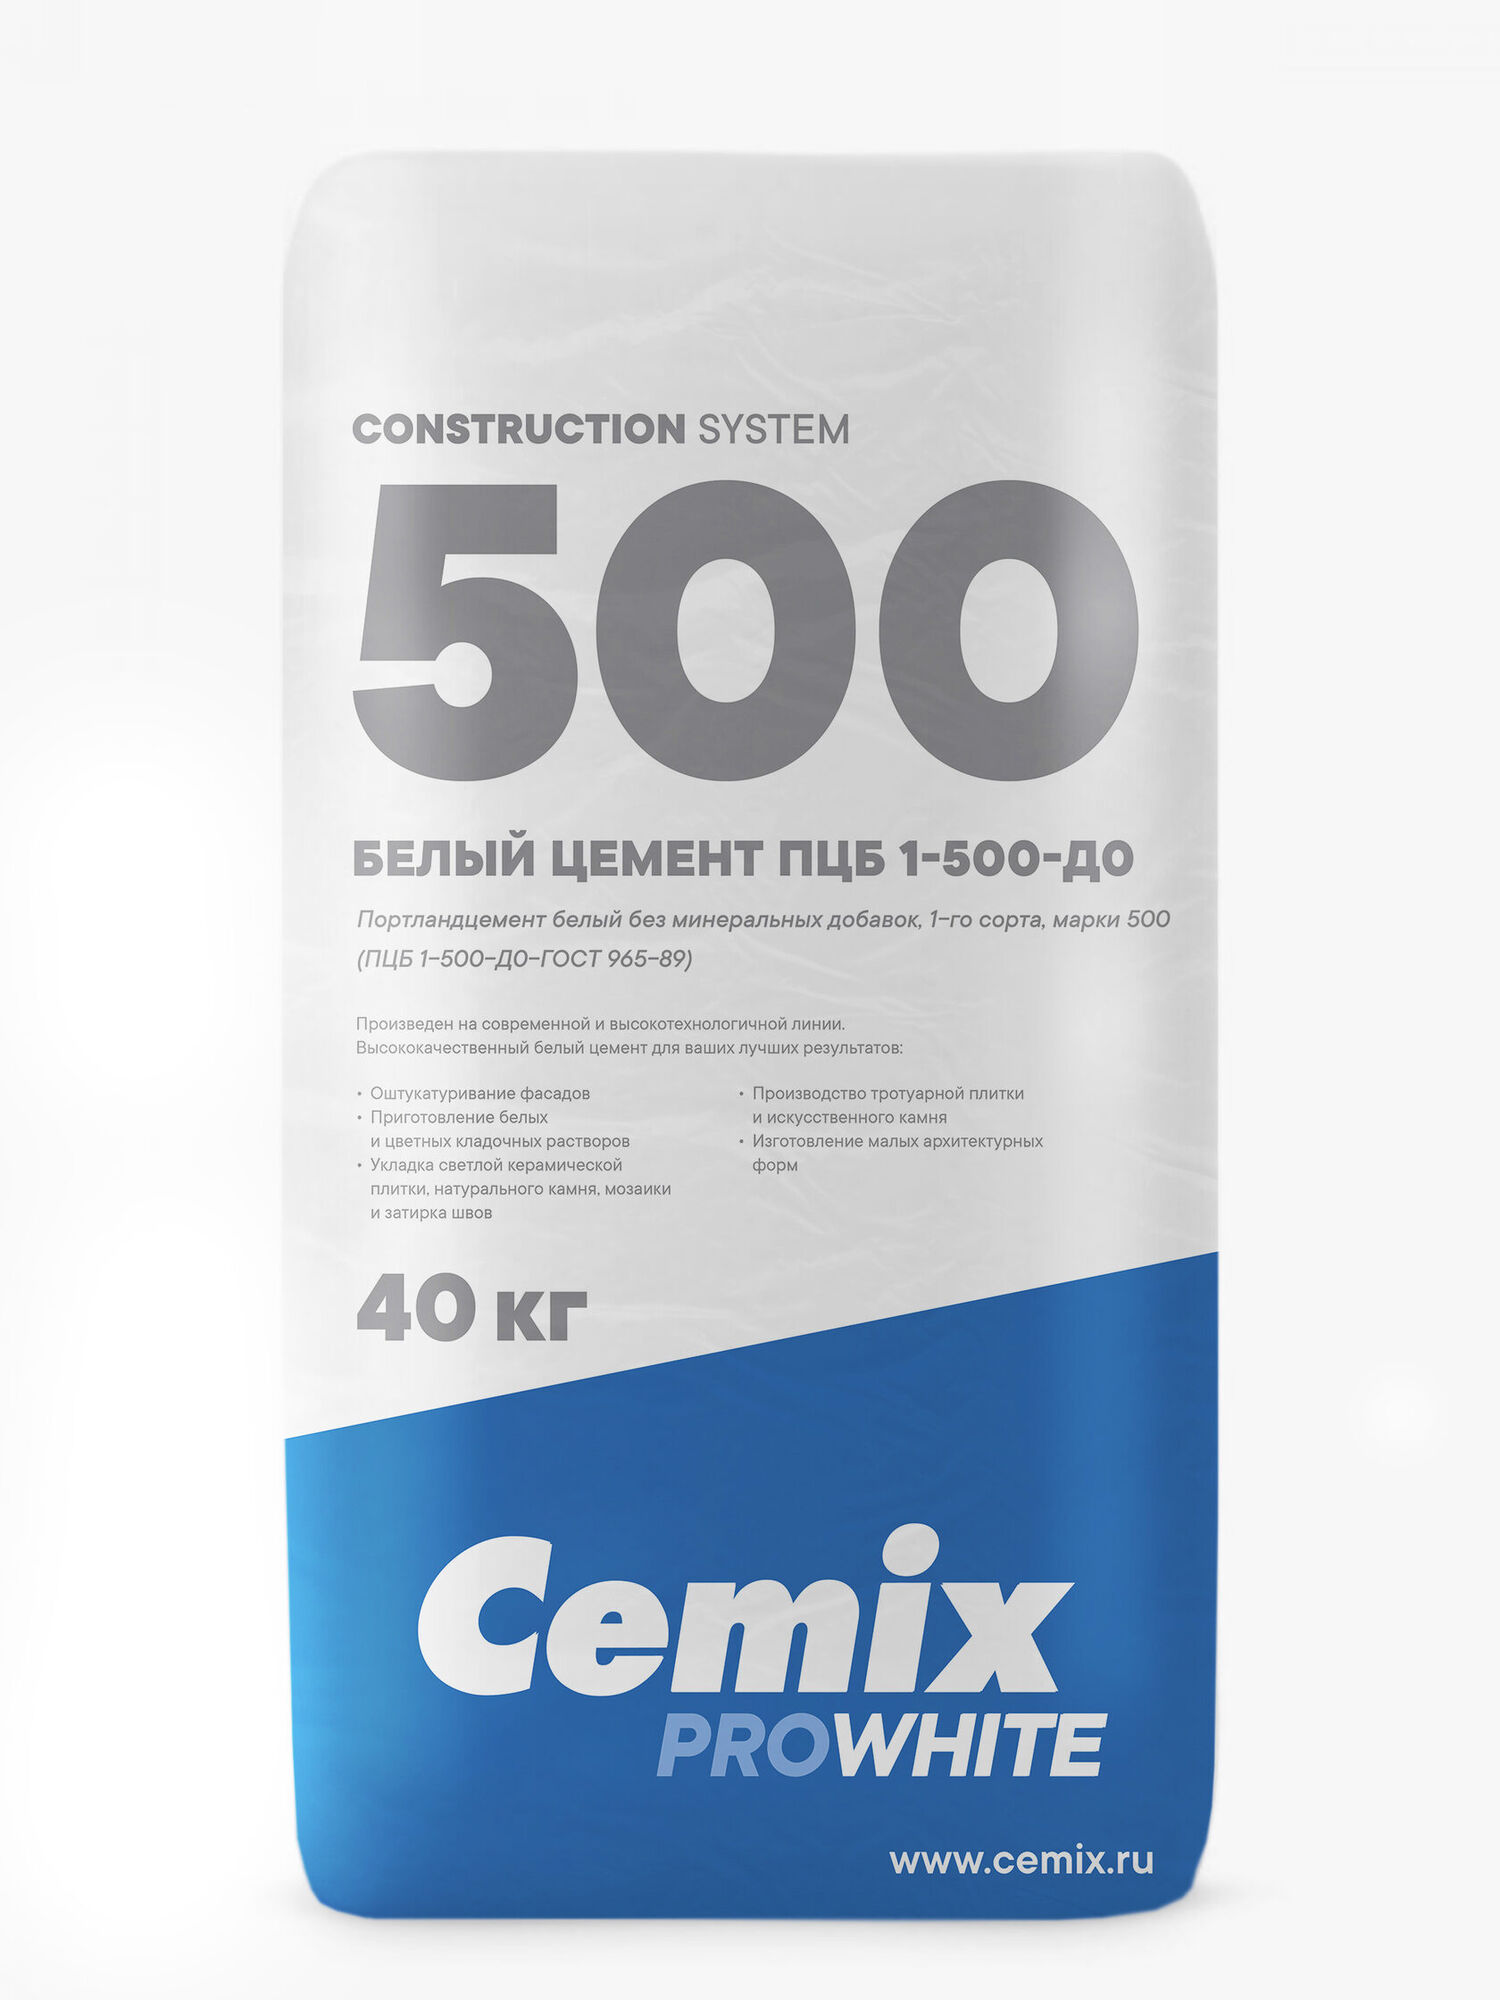 Белый цемент 500 cemix prowhite, Цемикс, 40кг